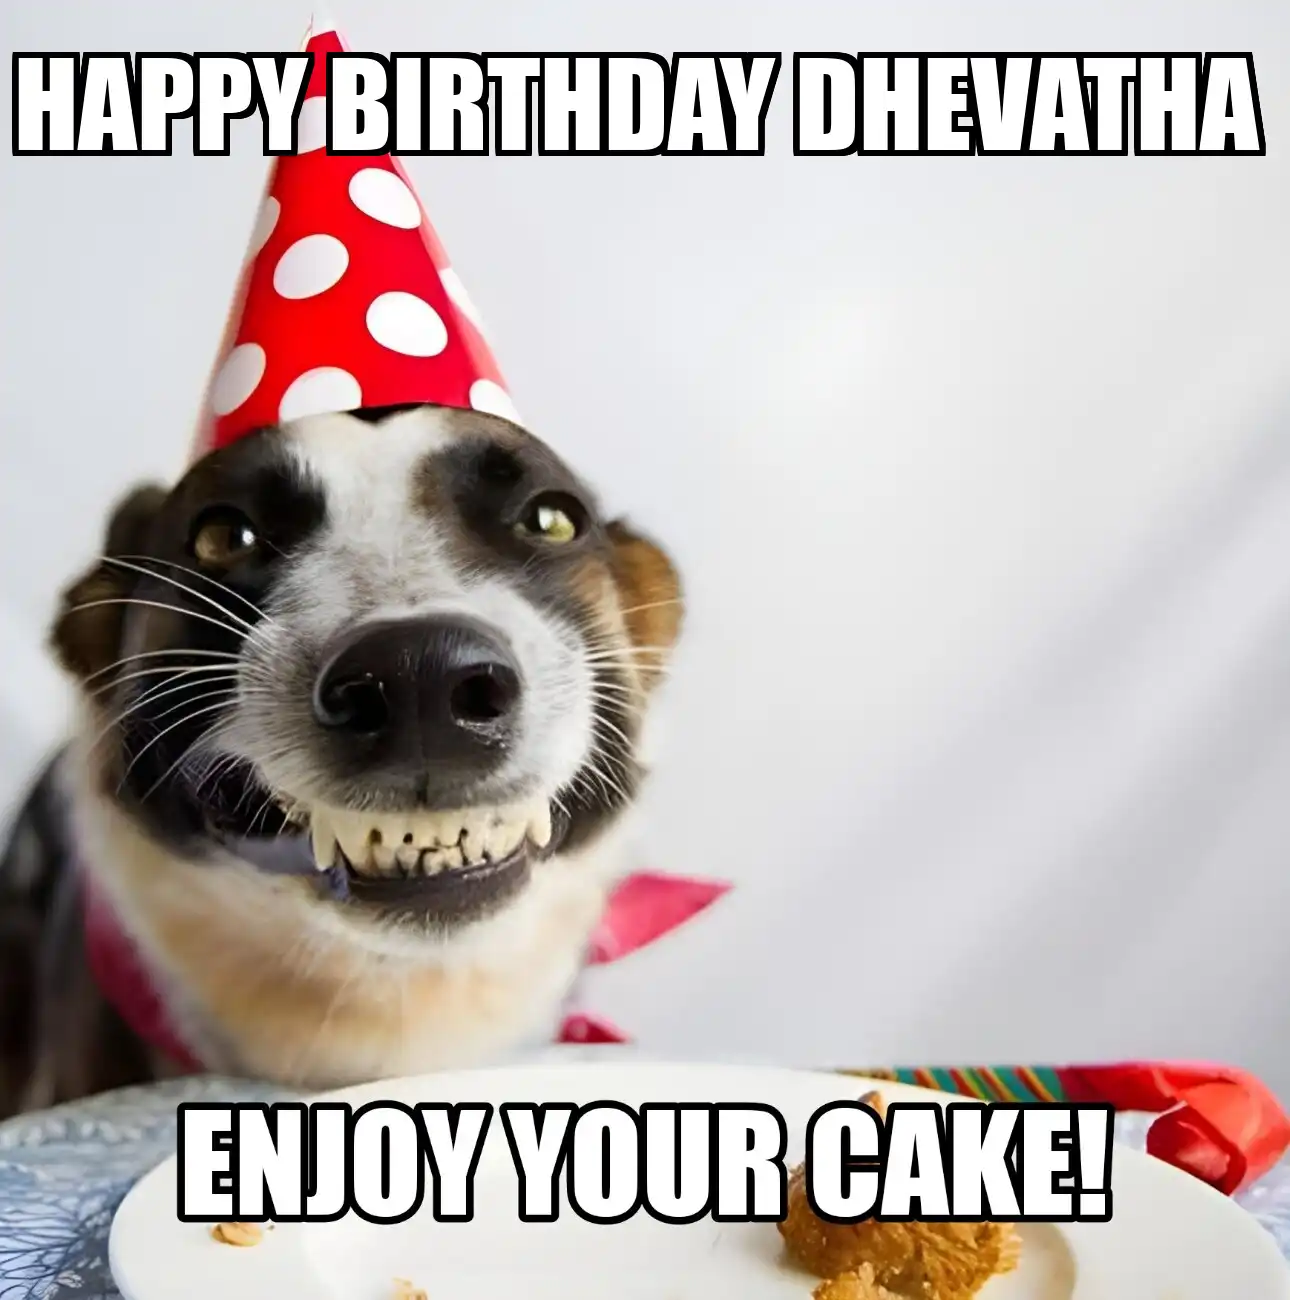 Happy Birthday Dhevatha Enjoy Your Cake Dog Meme